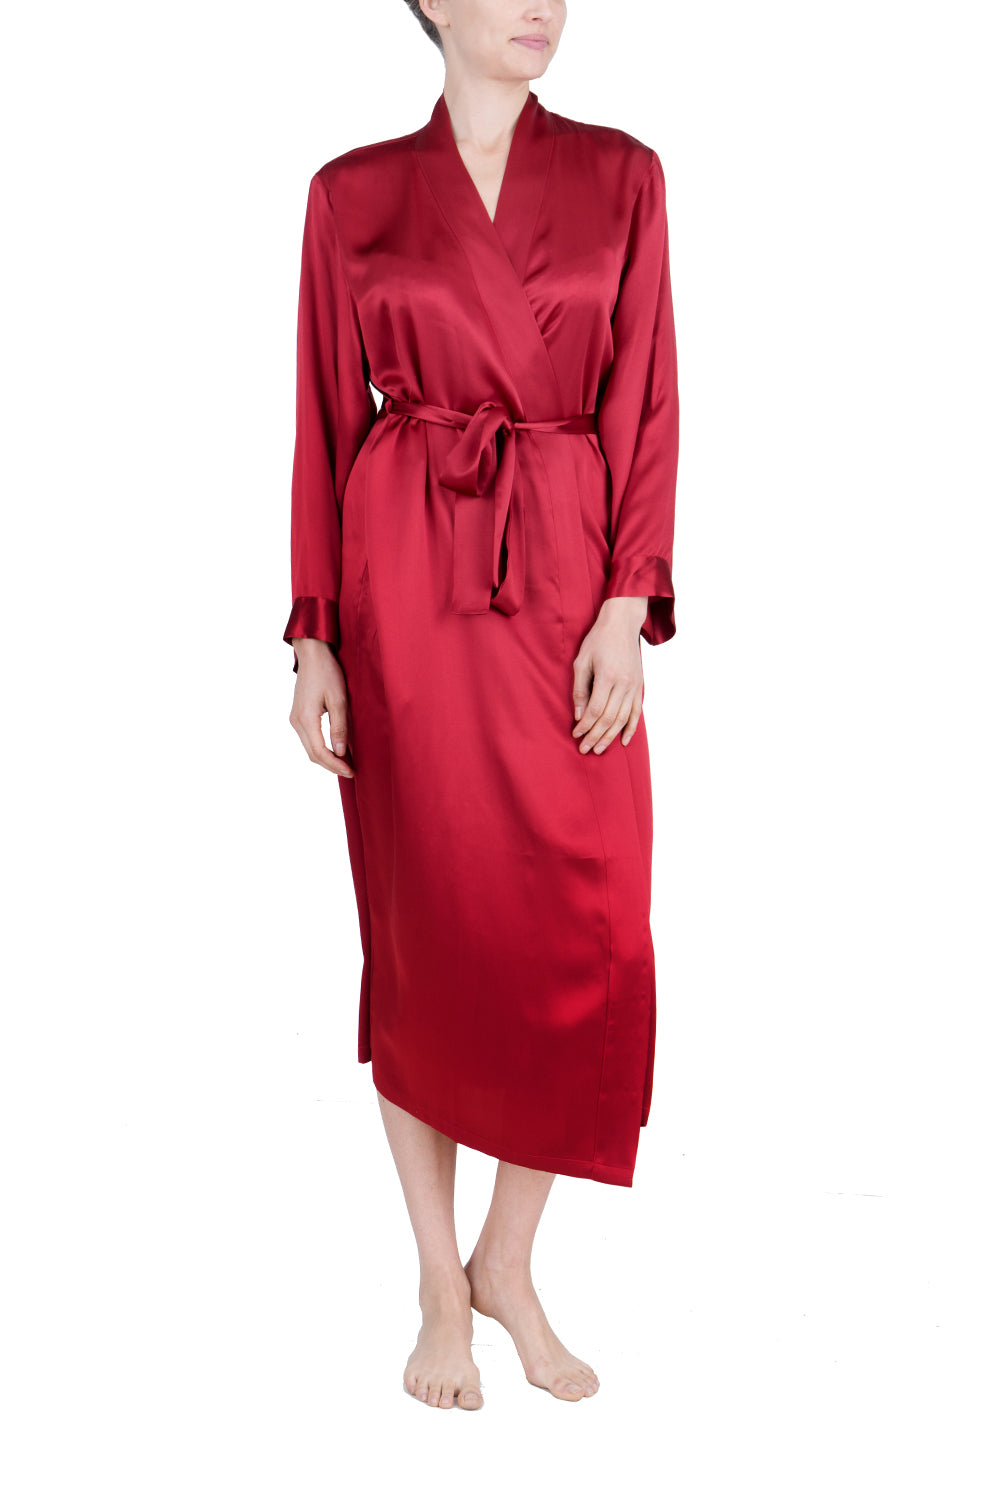 Women's Silk Sleepwear 100% Silk Long Robe - Burgundy / S/M